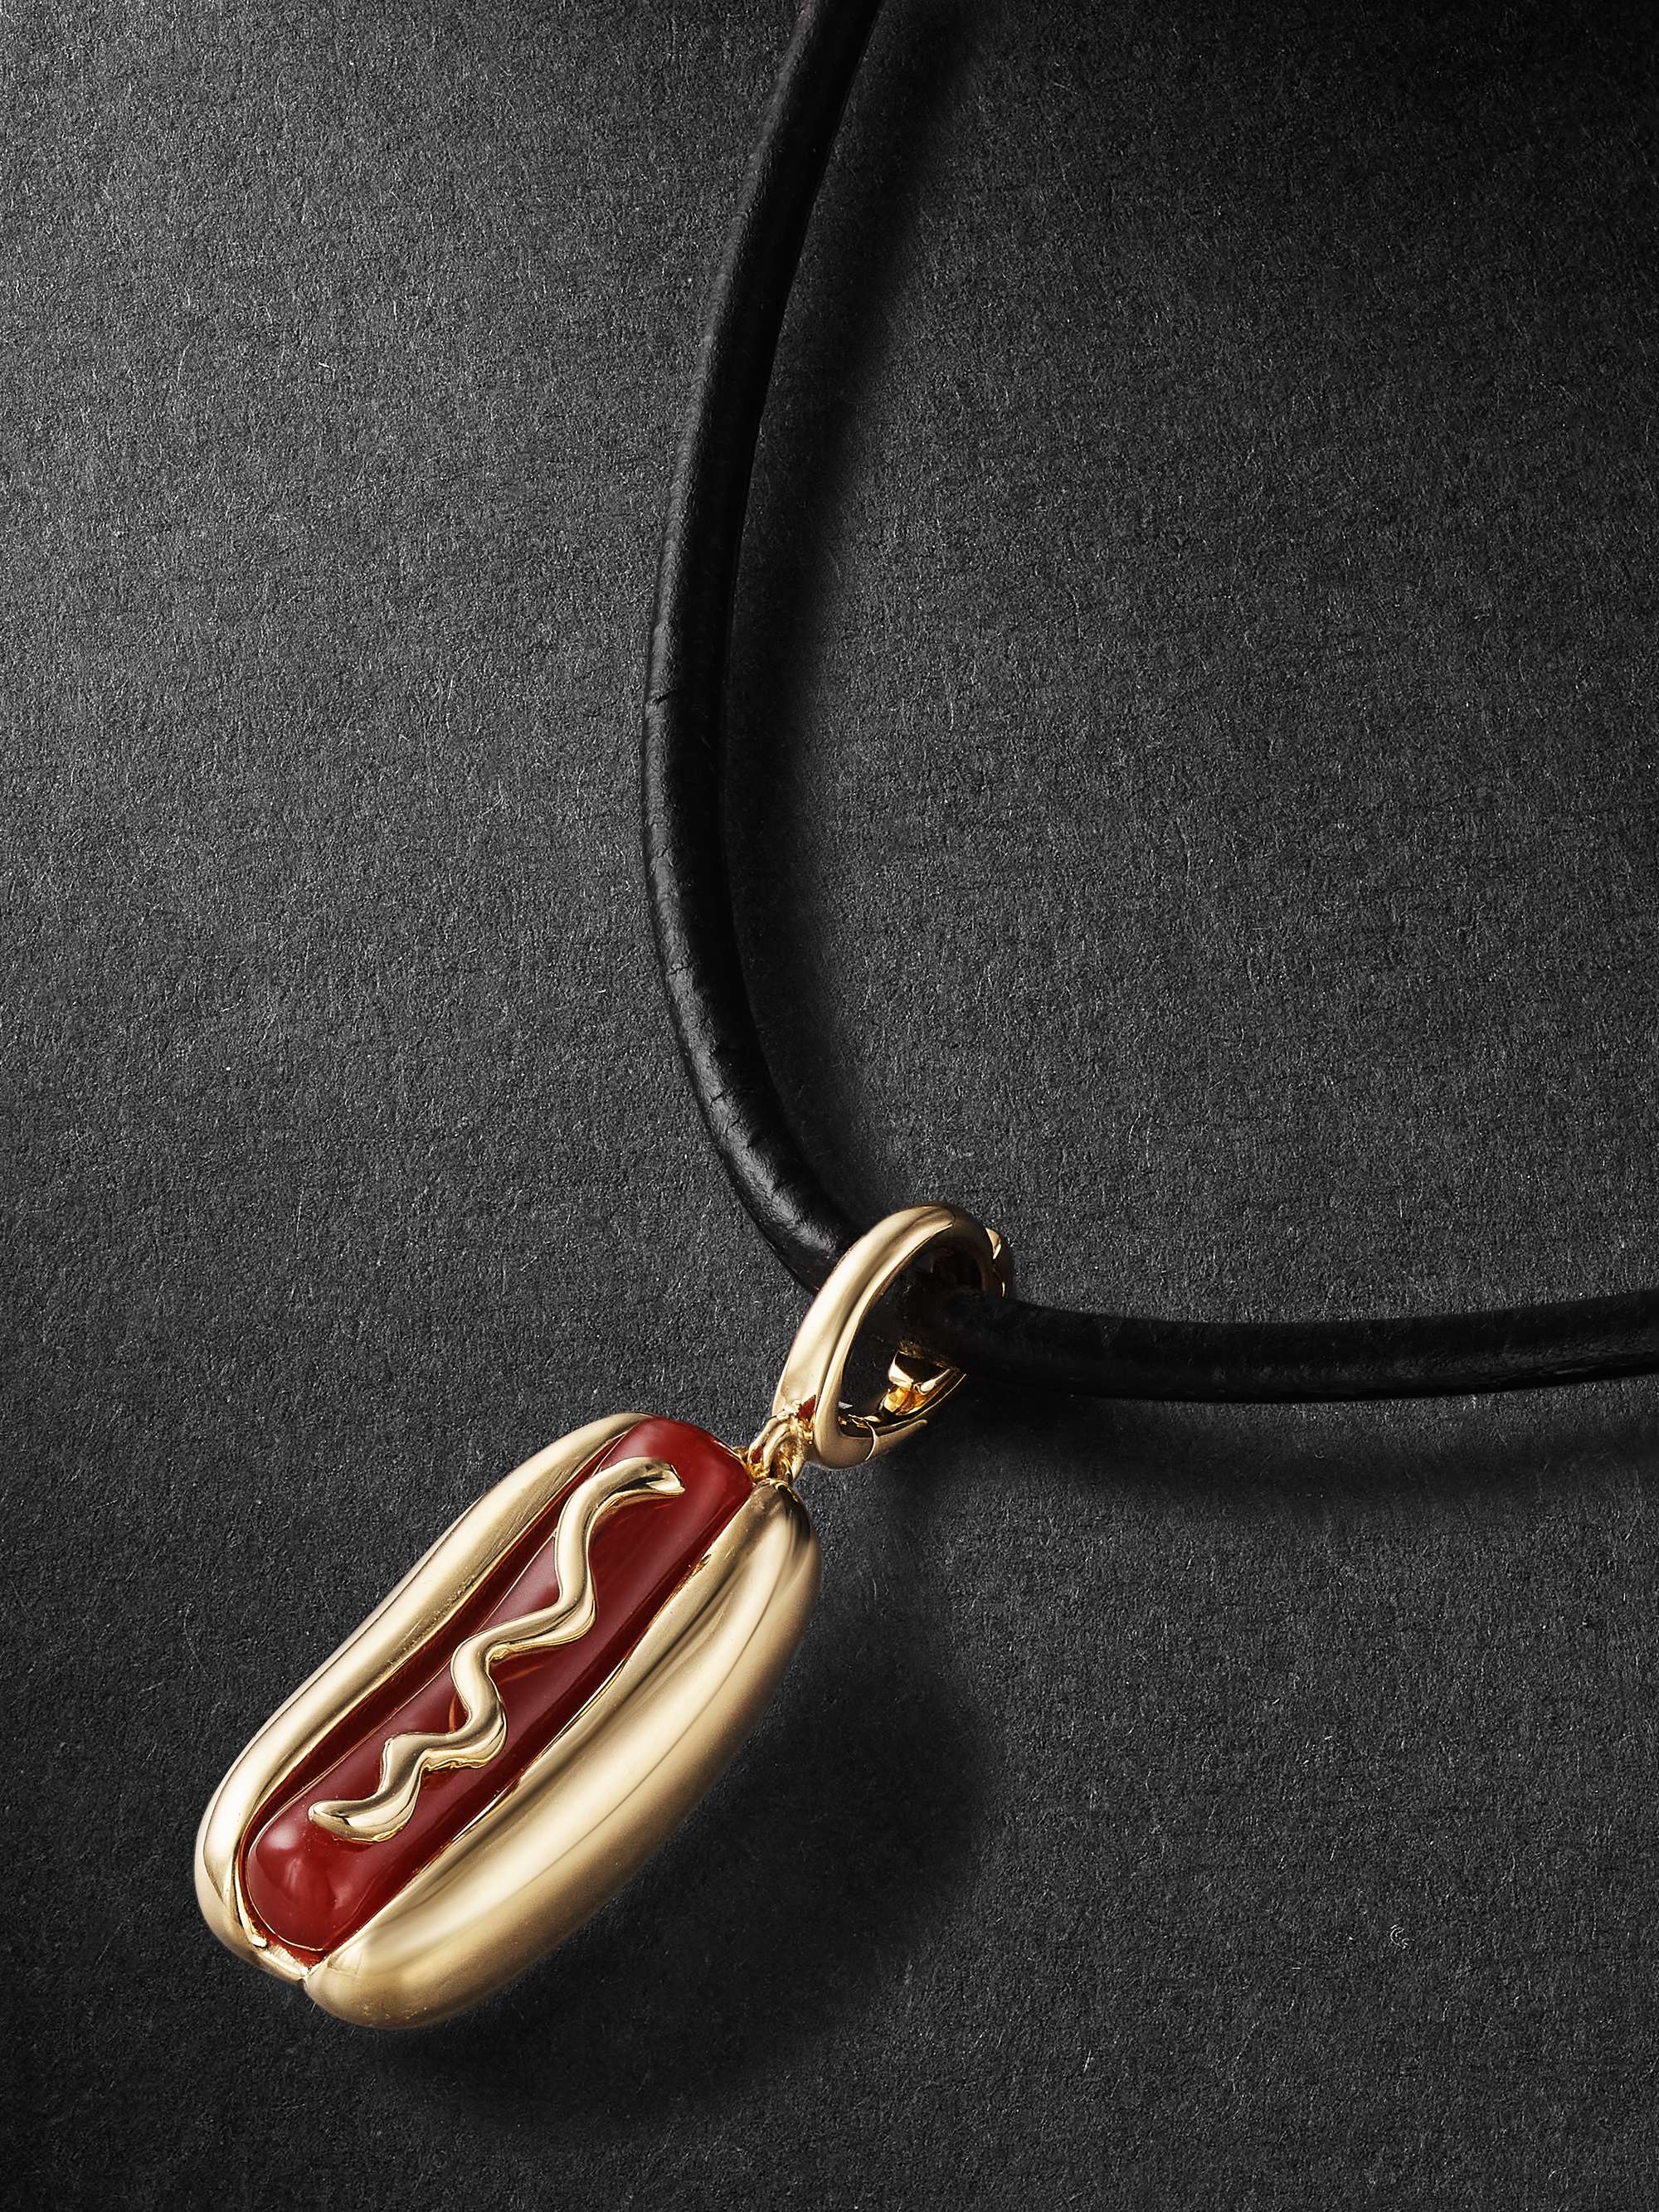 ANNOUSHKA Hot Dog 18-Karat Gold and Agate Necklace Pendant